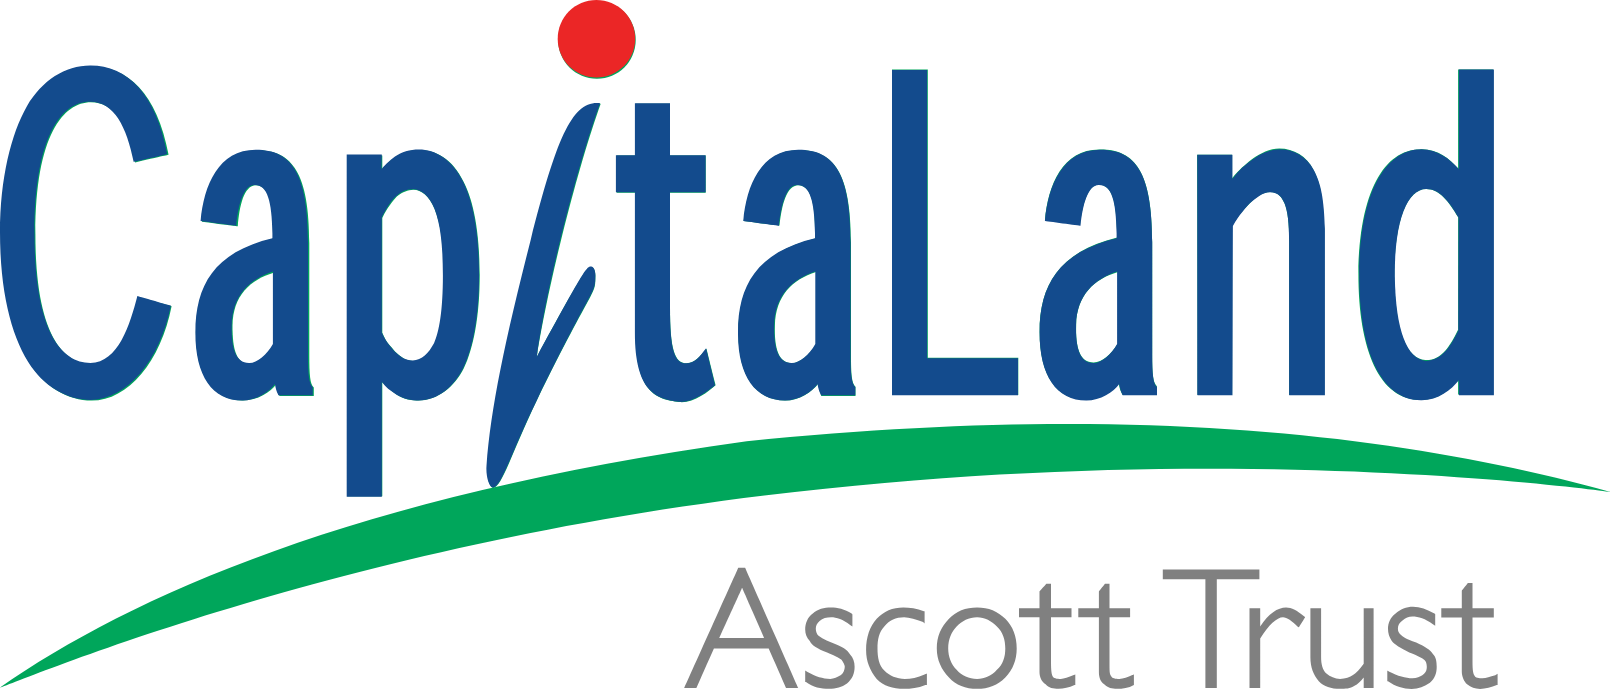 CapitaLand Ascott Trust logo large (transparent PNG)